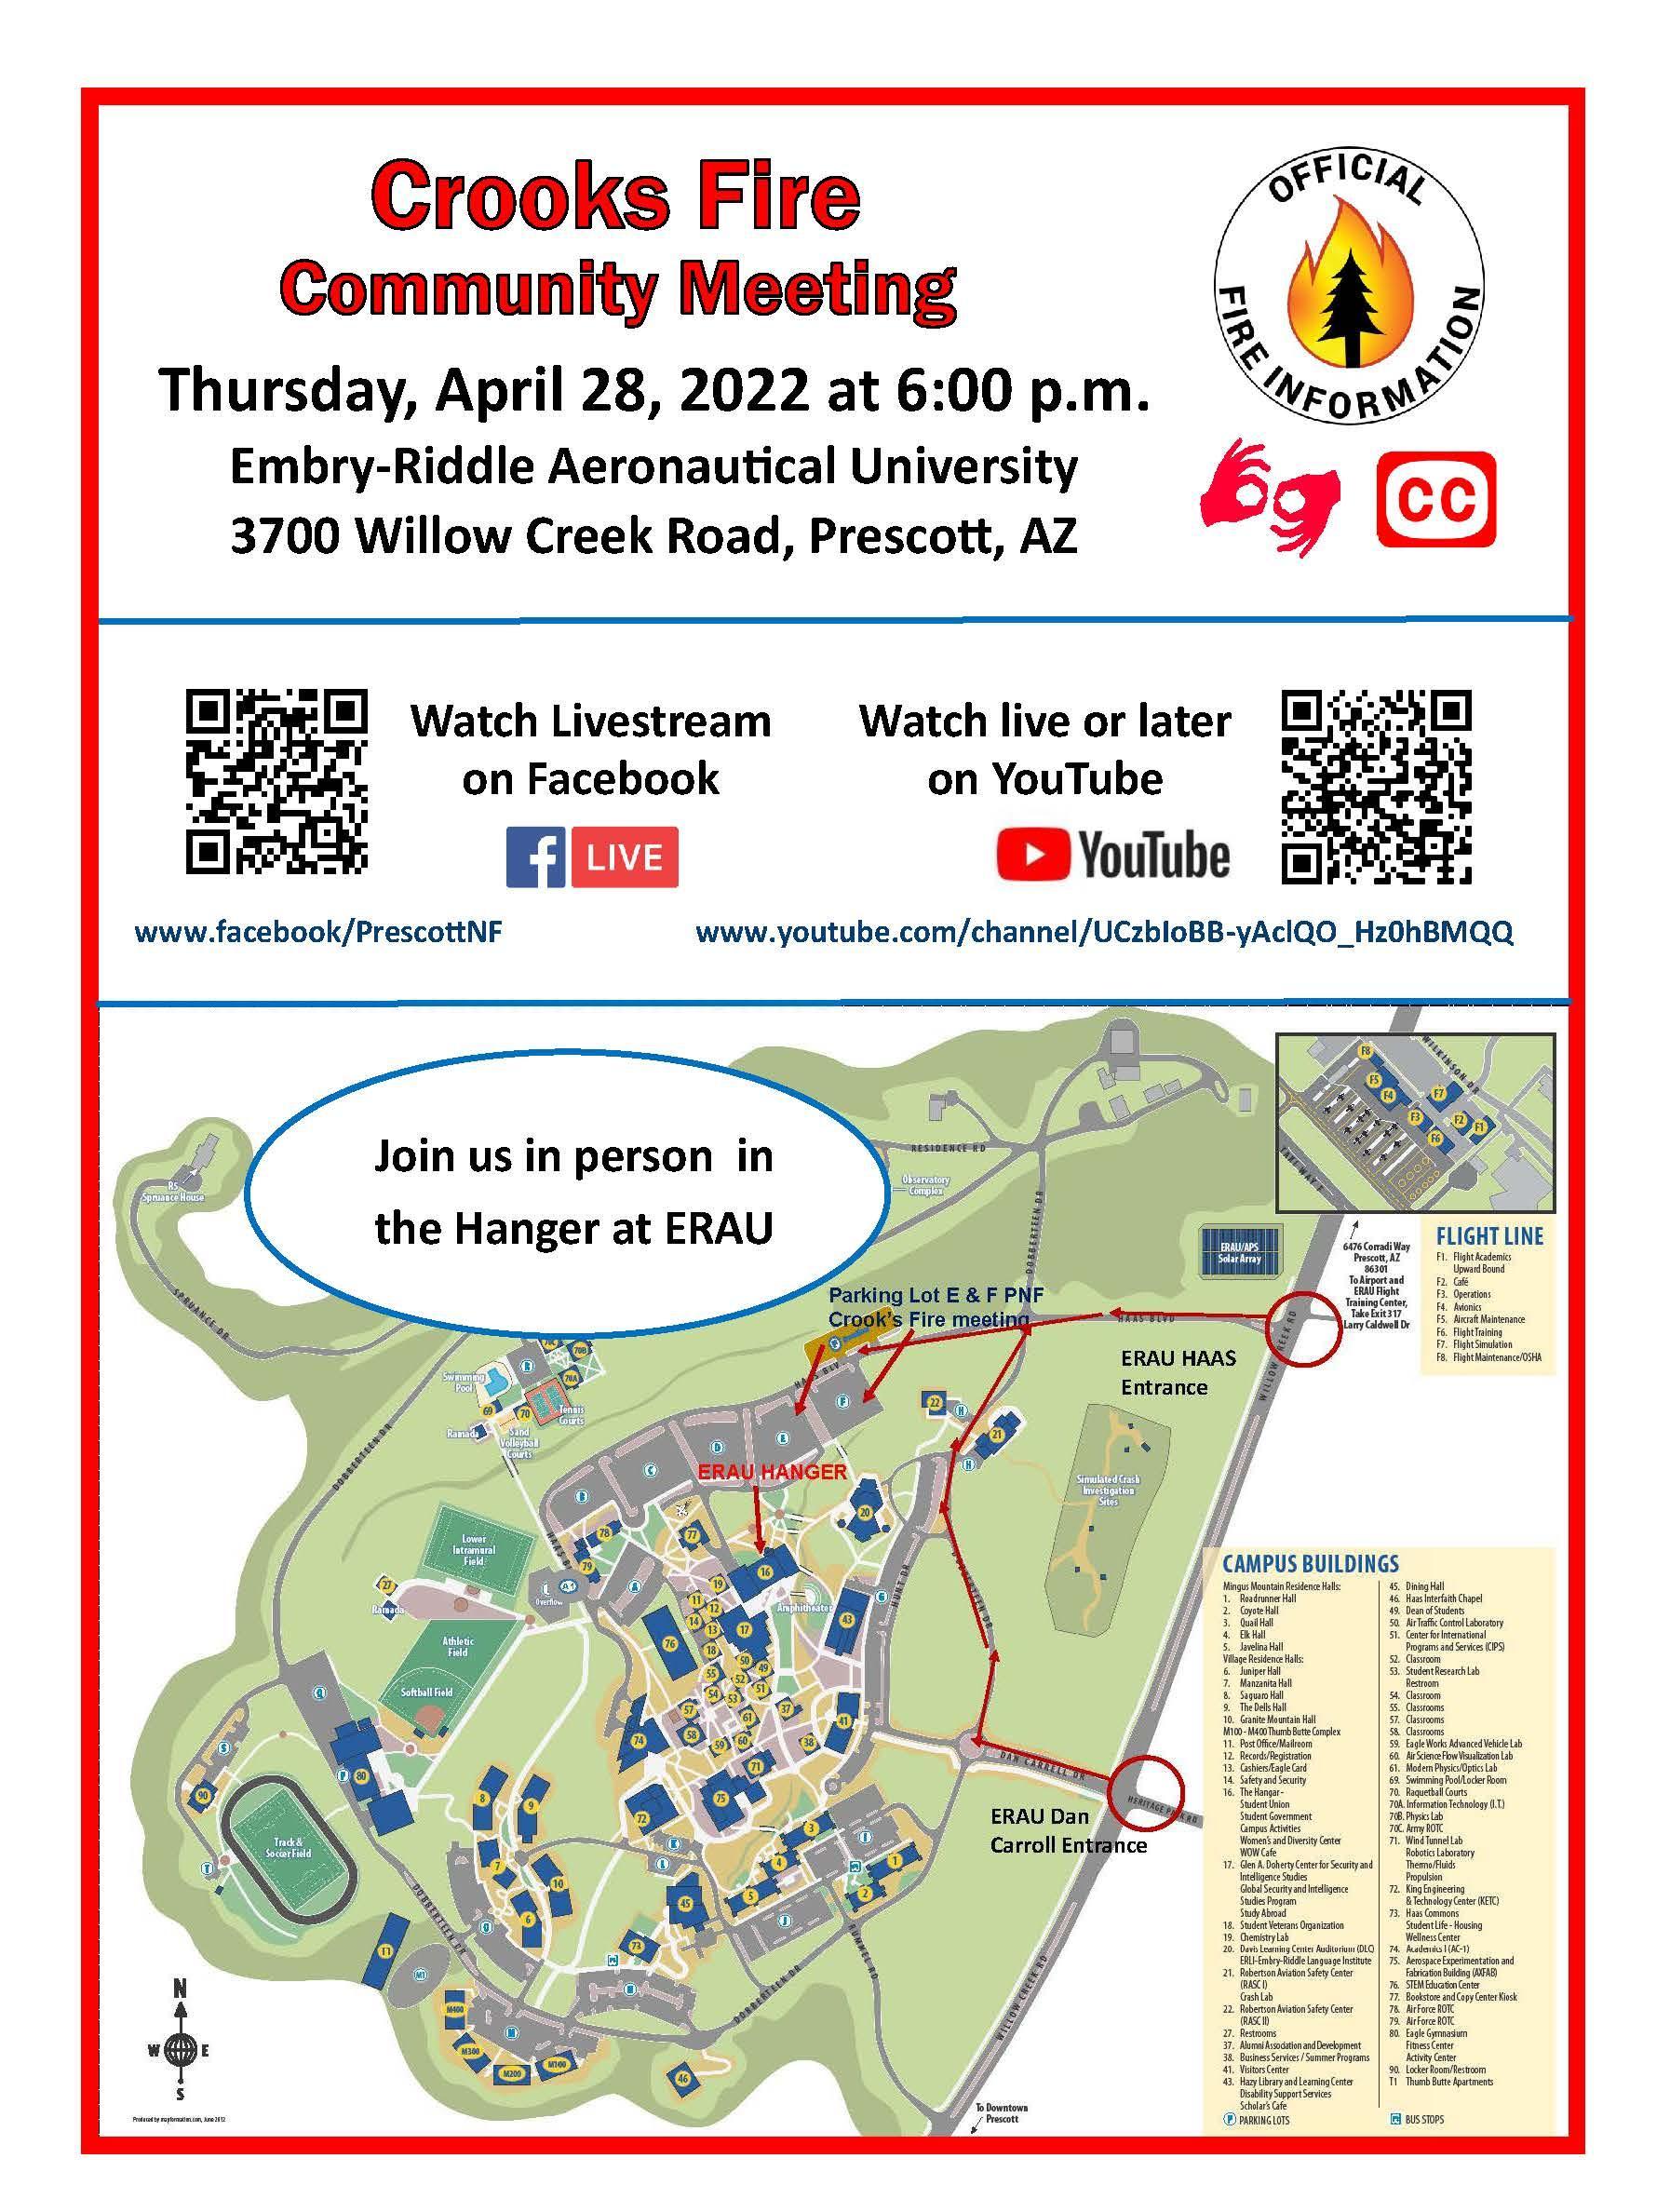 Crooks Fire Community Meeting - Thursday 4/28/22